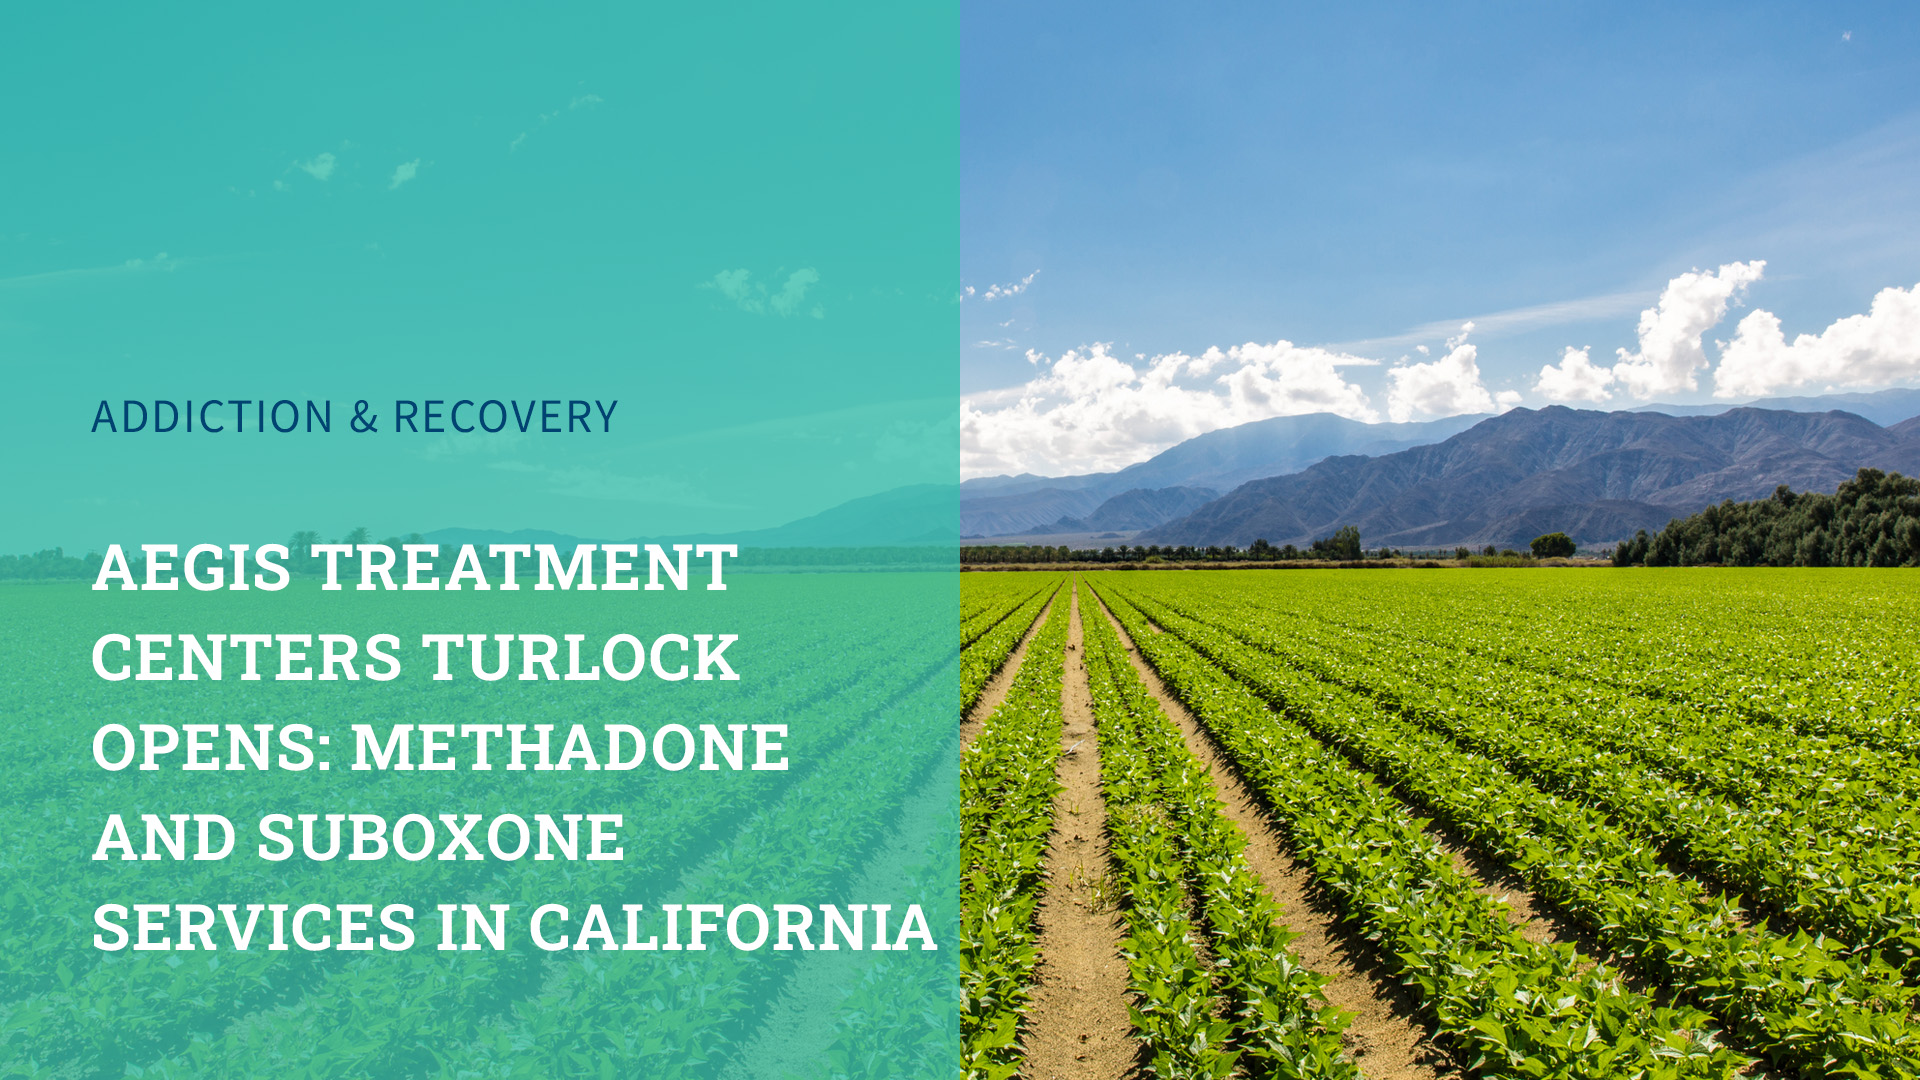 Aegis Treatment Centers Turlock Opens: Methadone and Suboxone Services in California